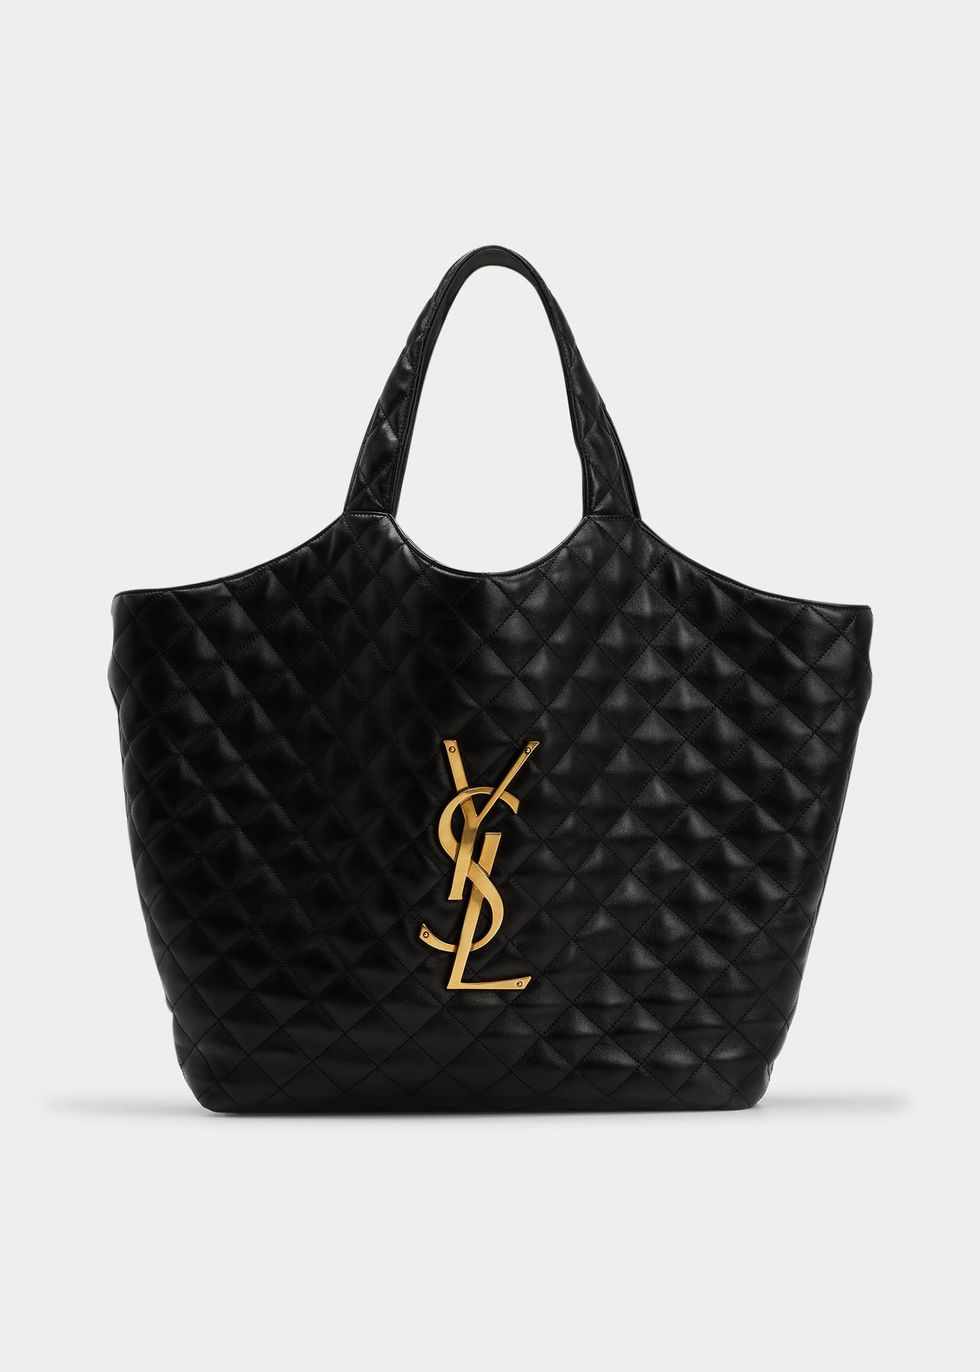 Celebs & YSL bags  Ysl bag, Ysl outfits women, Ysl bag black